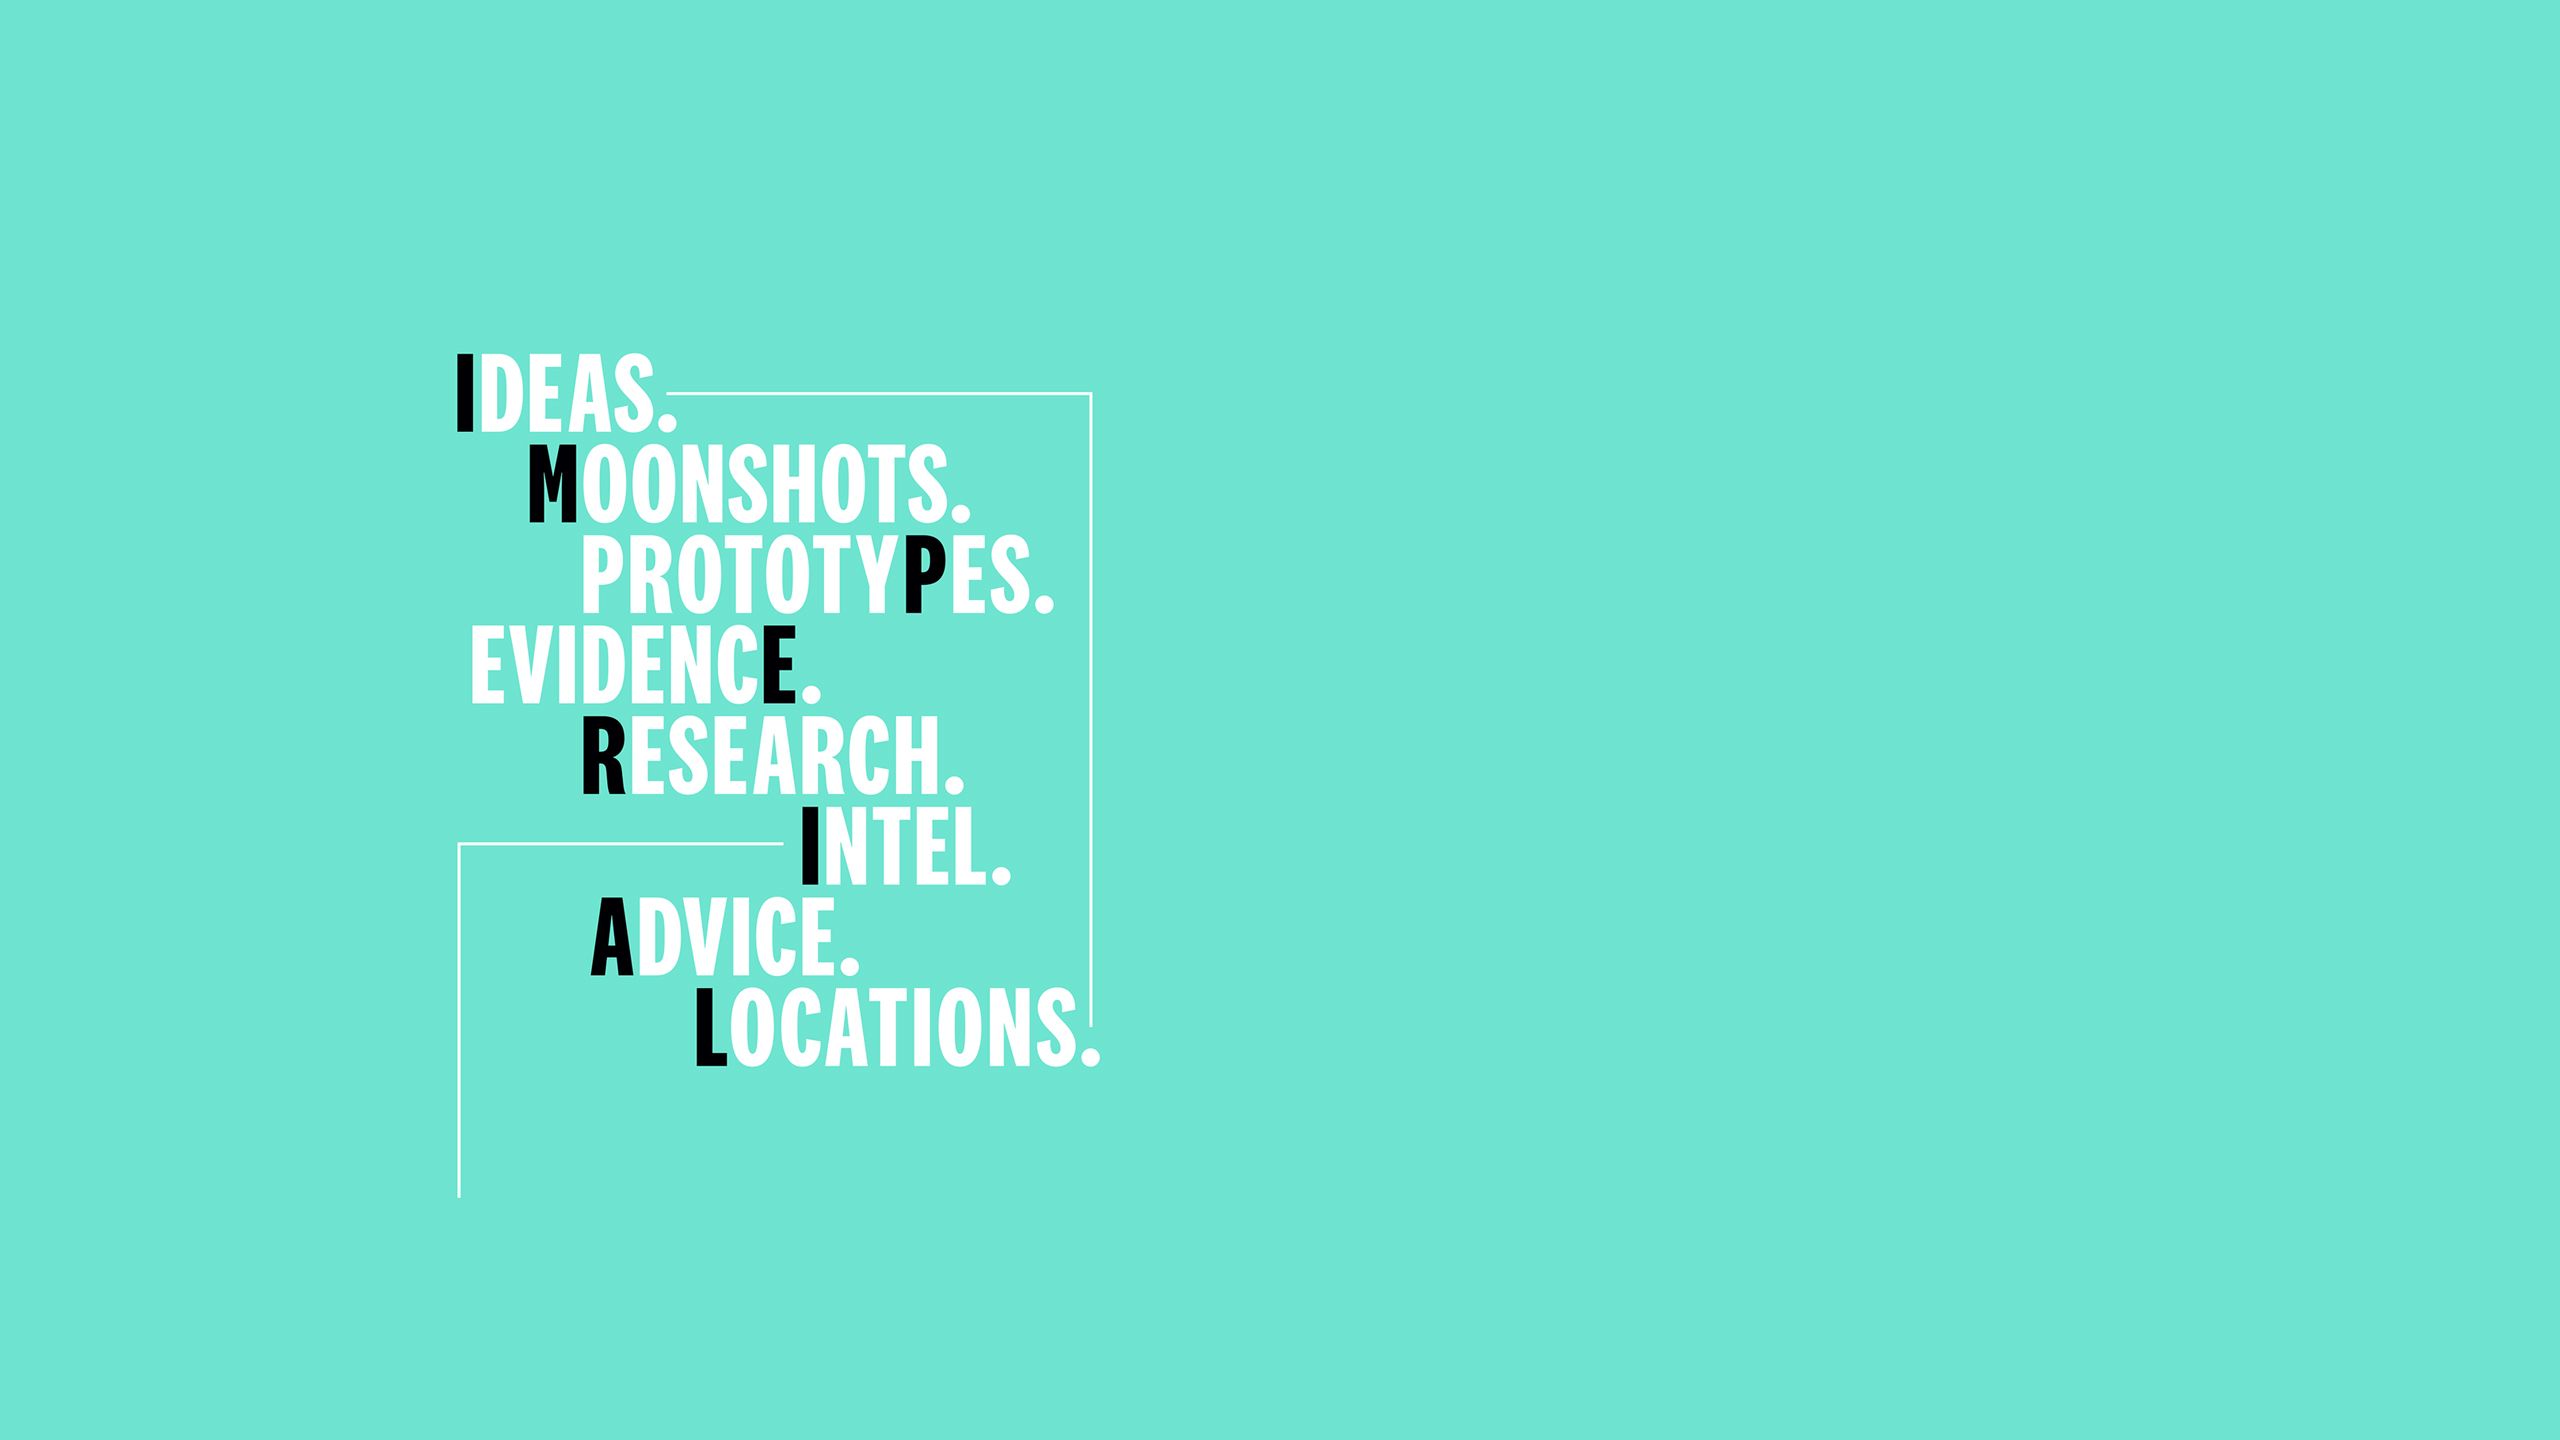 Ideas, moonshots, prototypes, evidence, research, intel, advice, locations.